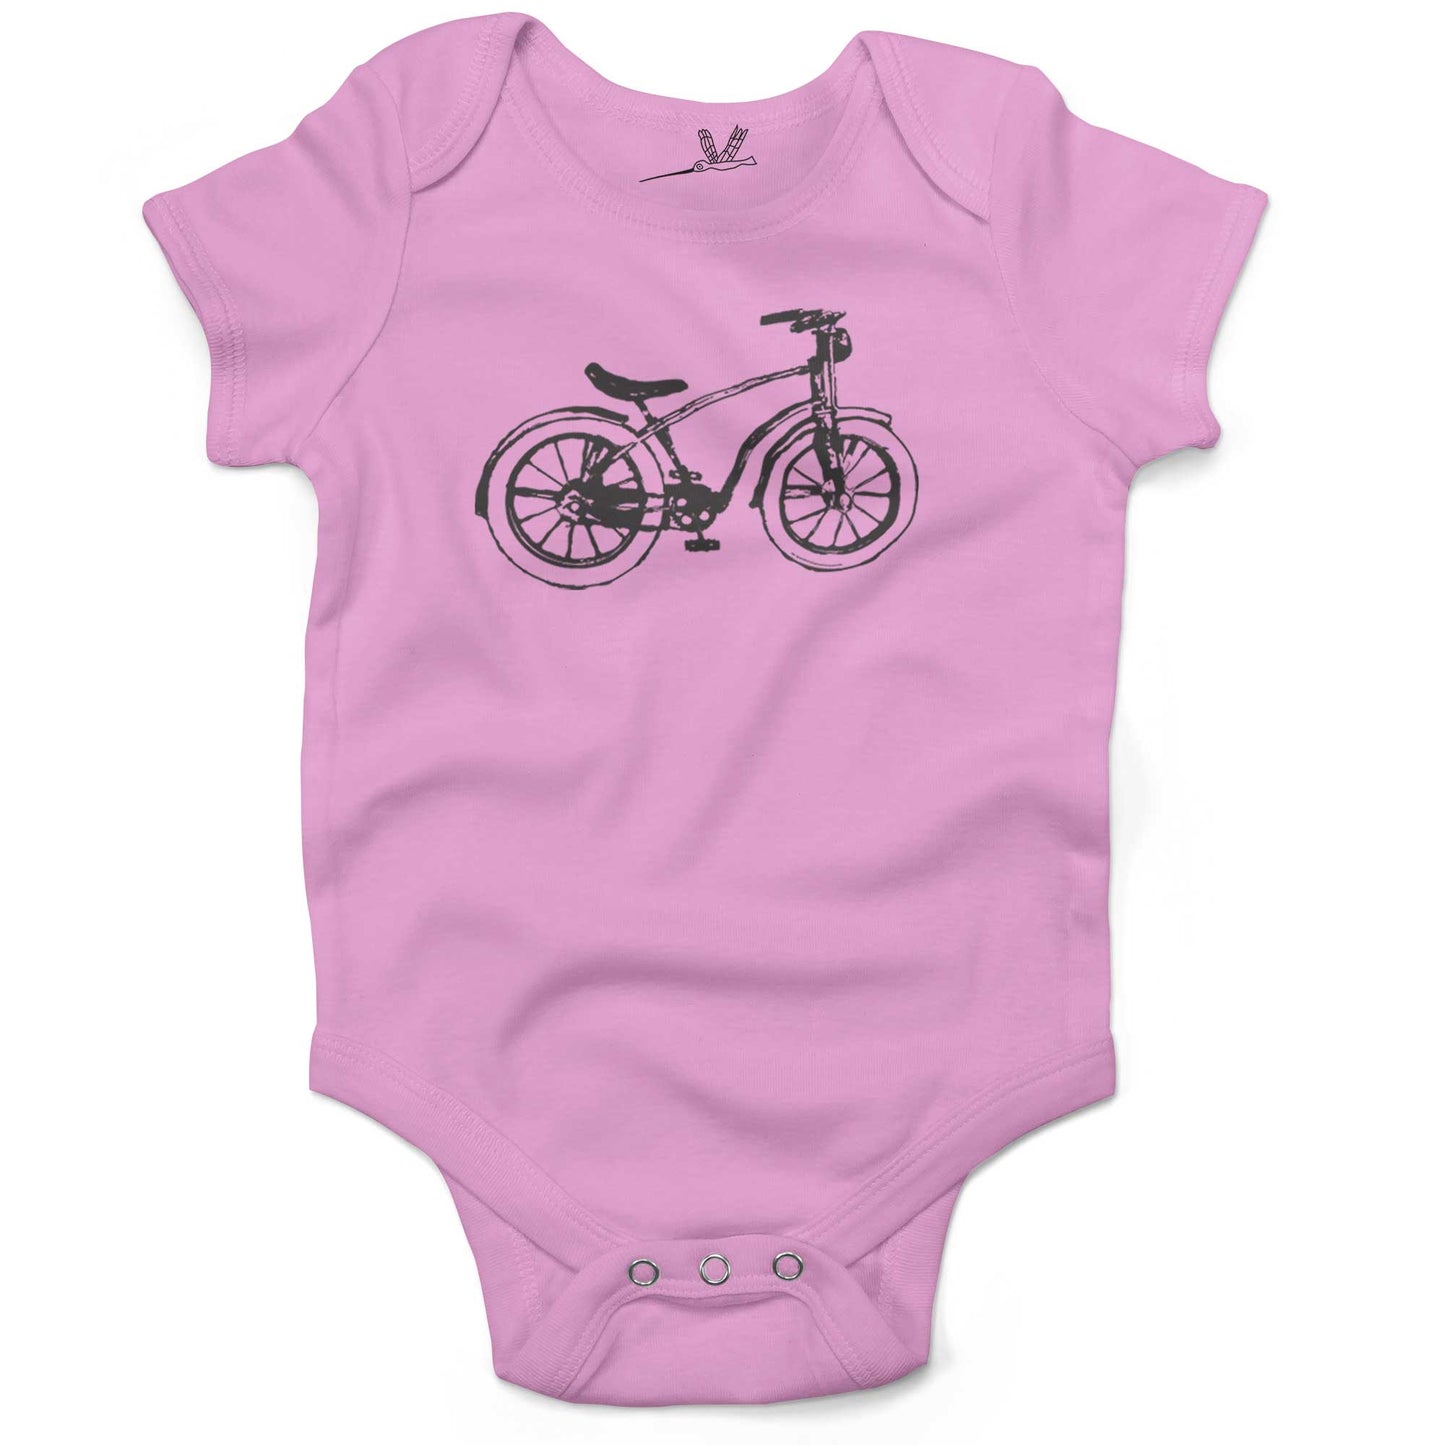 Vintage Bike Infant Bodysuit or Raglan Baby Tee-Organic Pink-3-6 months